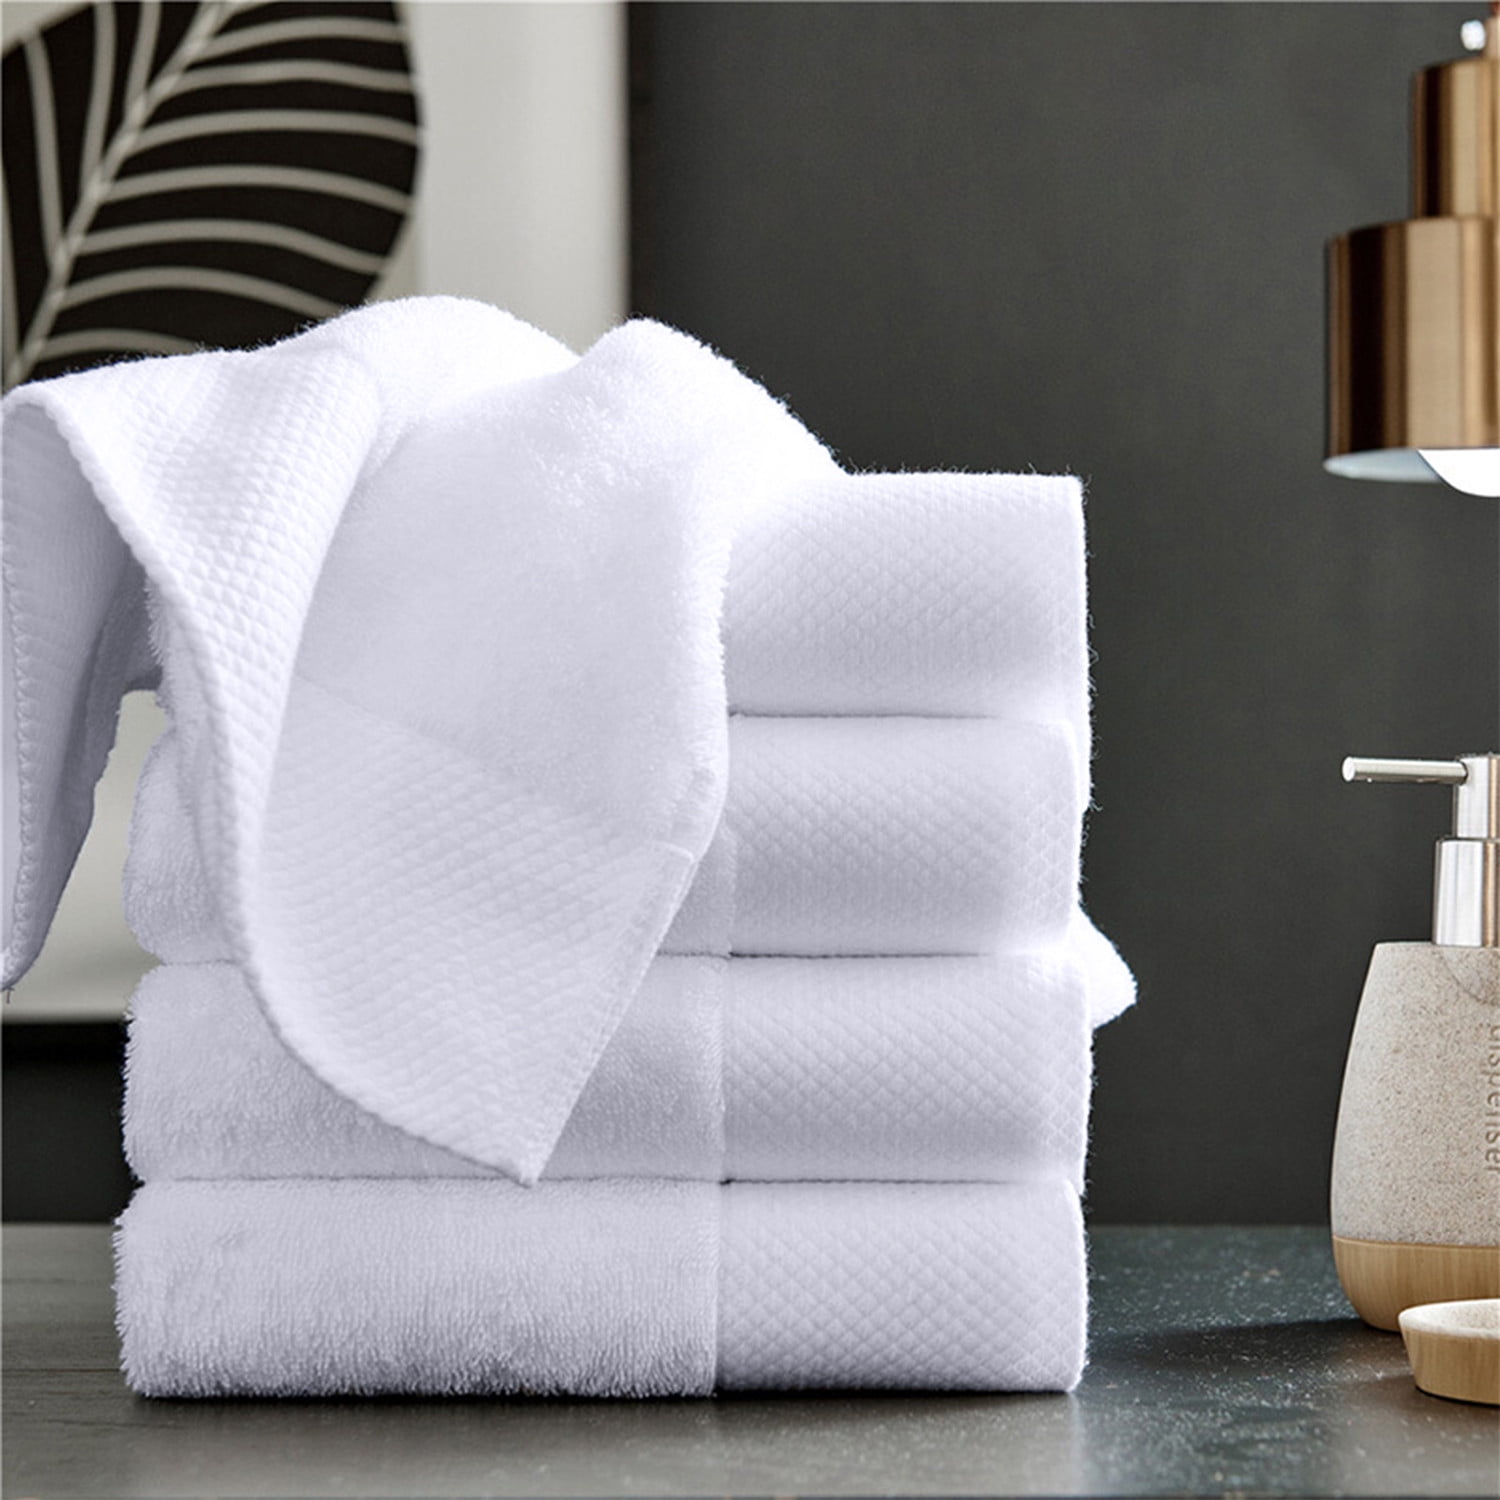 Htwon 100% Genuine Pakistan Cotton Premium Luxury Bath Towels Set,24*55  inch Bath Towels Absorbent, Soft, and Eco-Friendly,for Bathroom,Hotel  Quality- White 